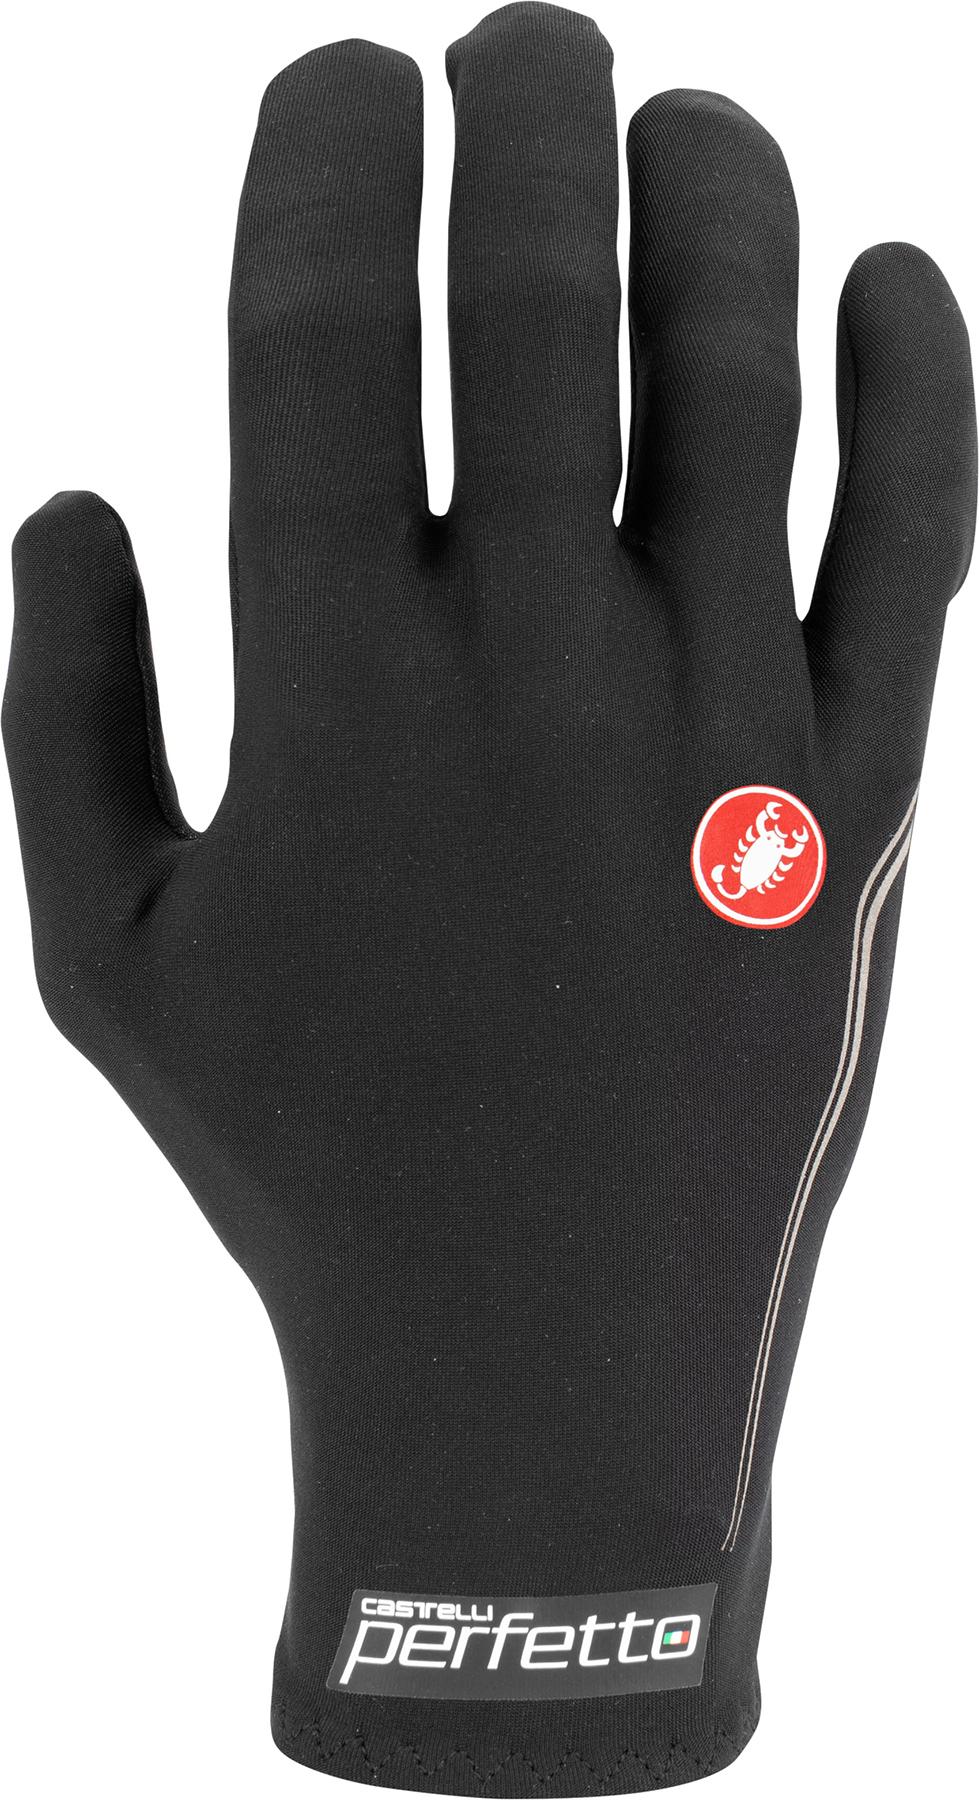 Castelli Perfetto Light Gloves - Black